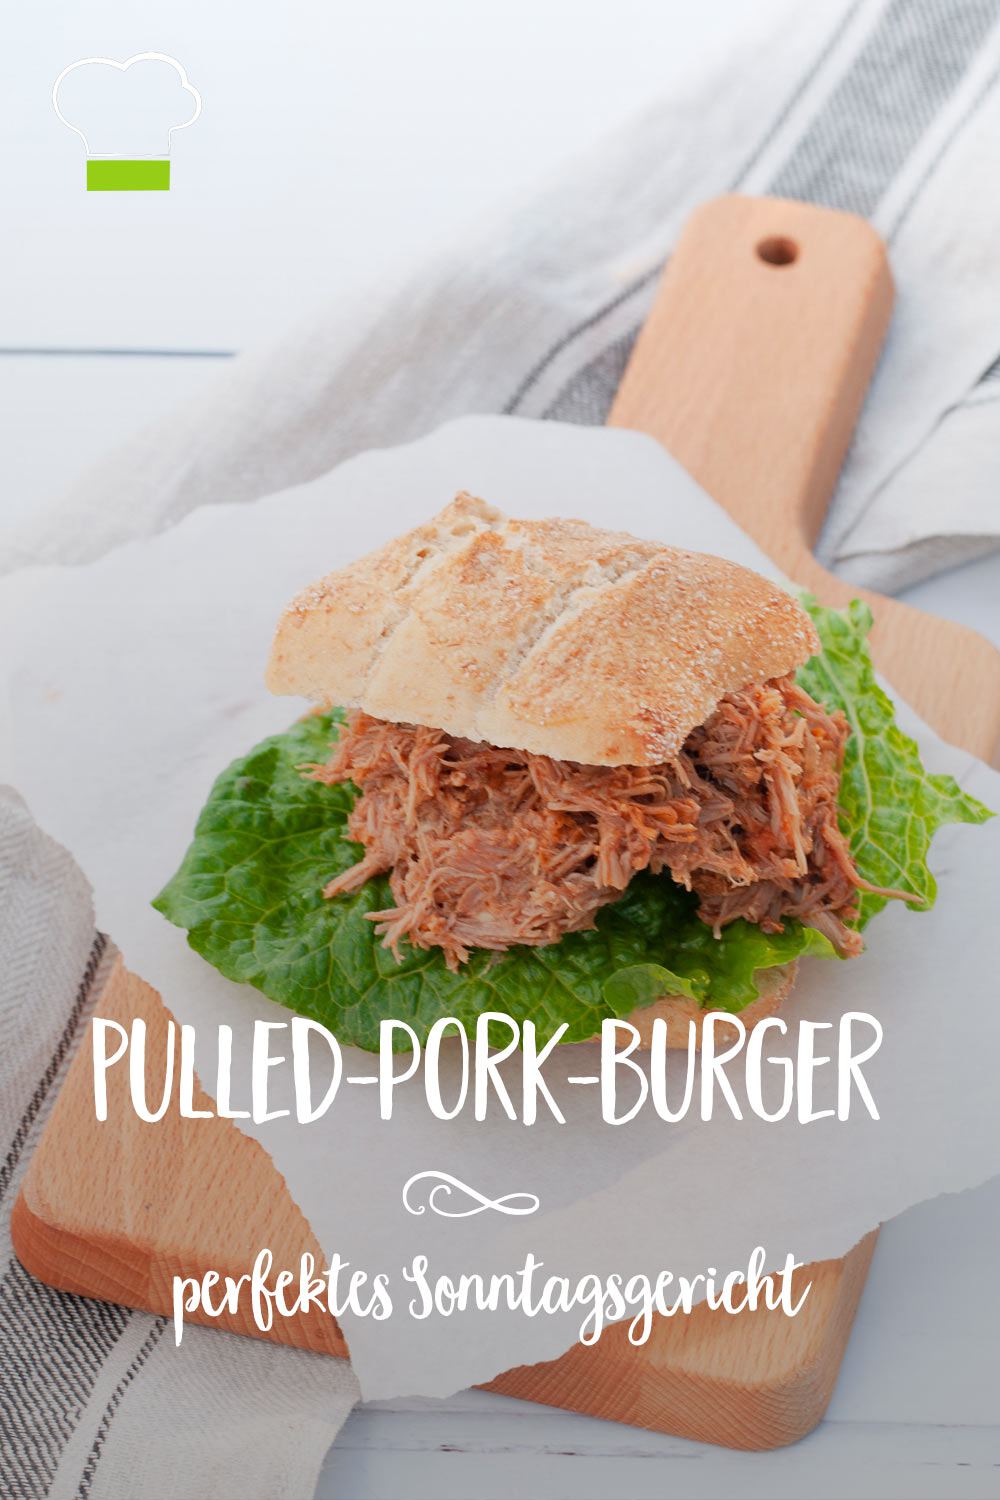 Pinterest Pulled-Pork-Burger